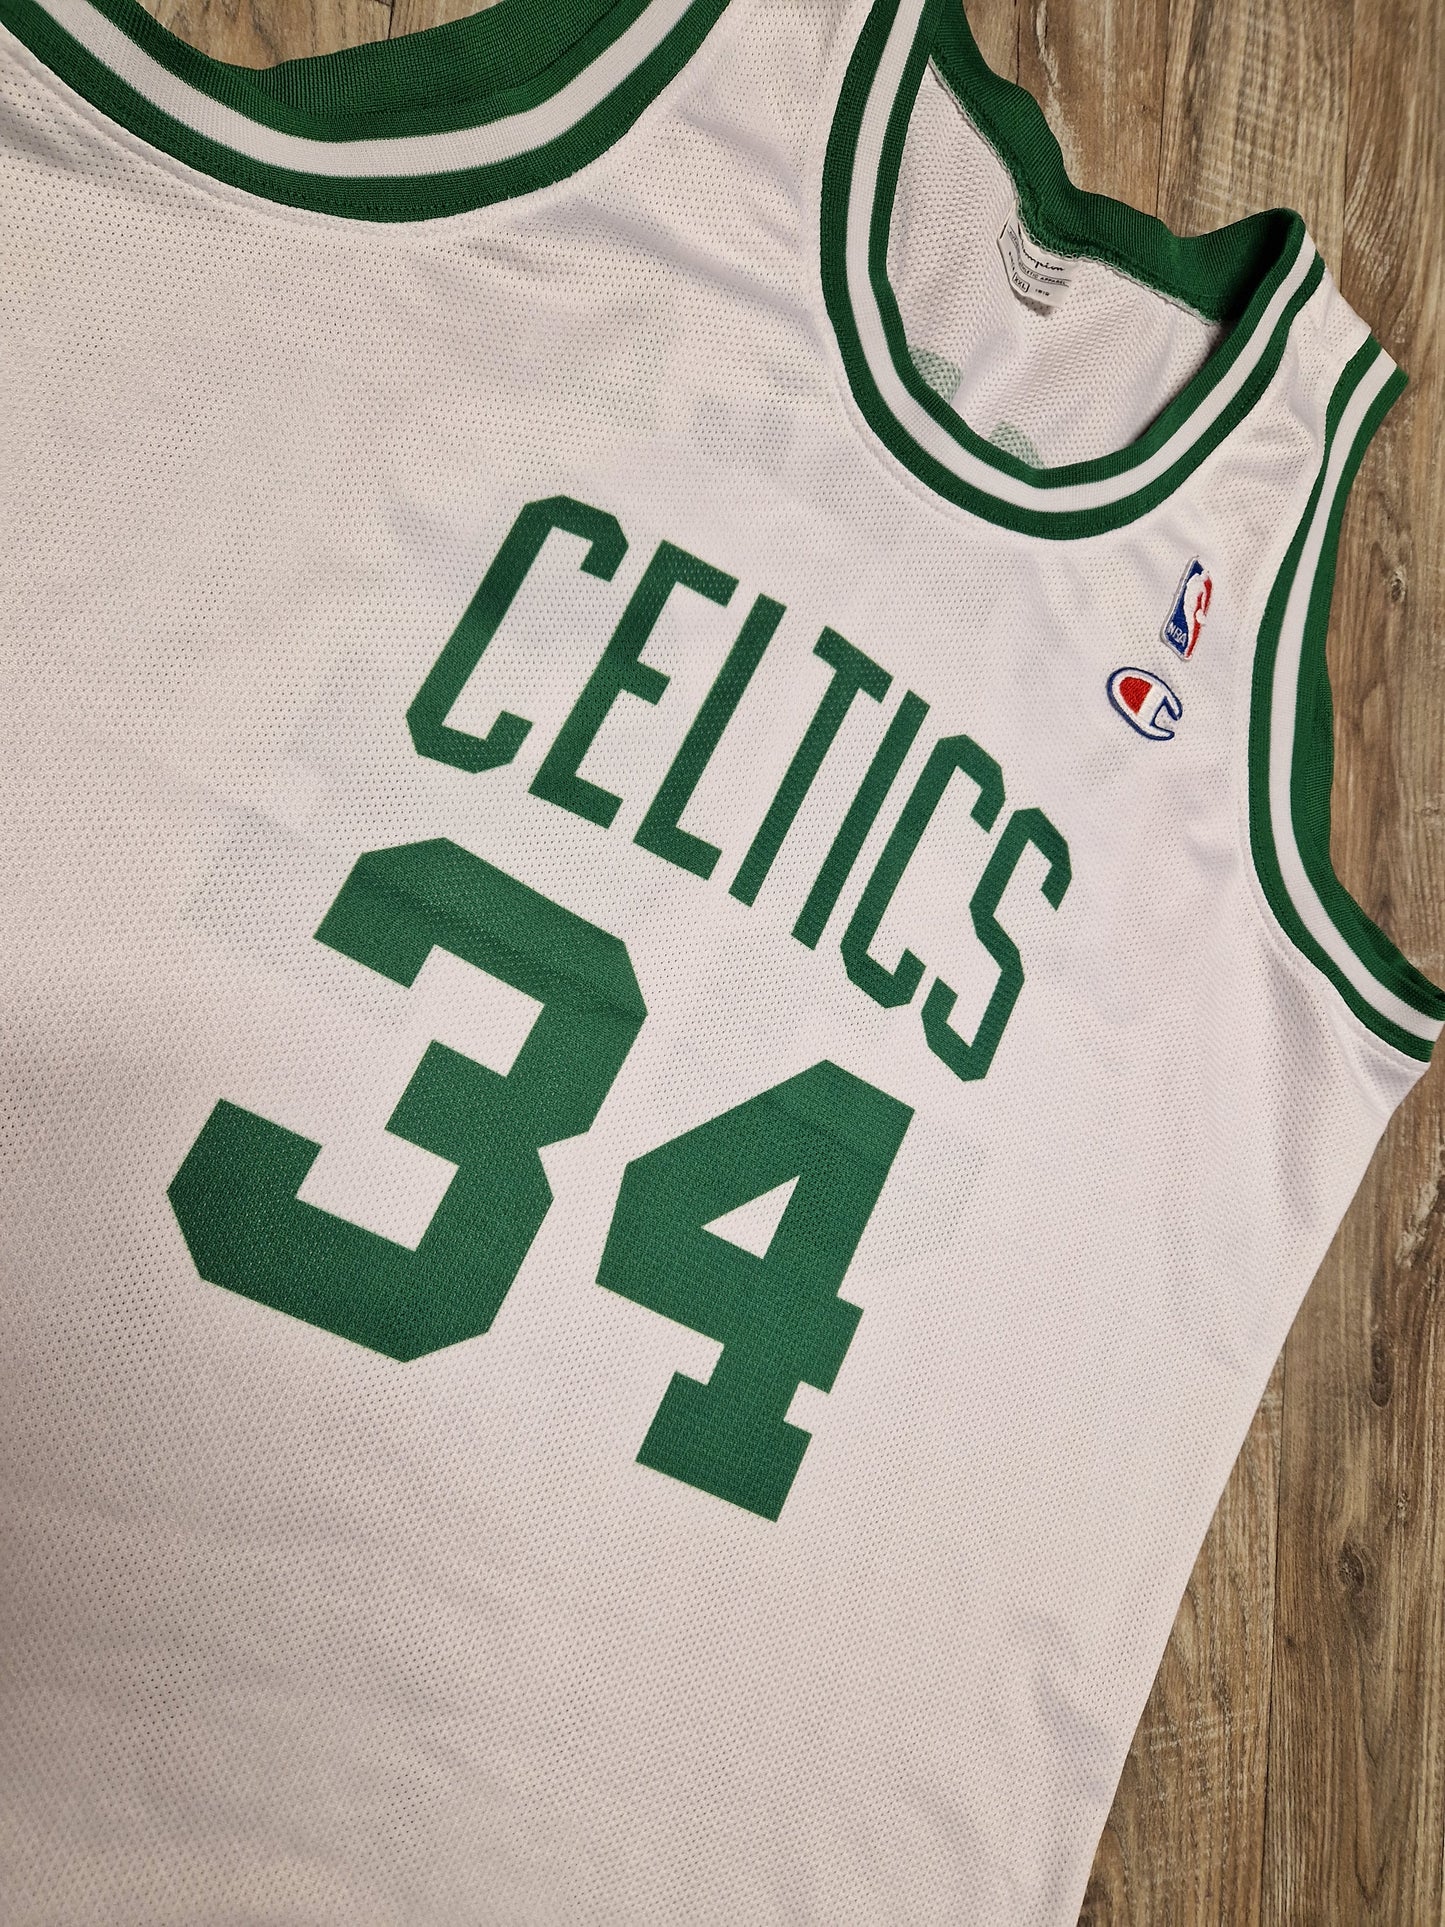 Paul Pierce Boston Celtics Jersey Size 2XL